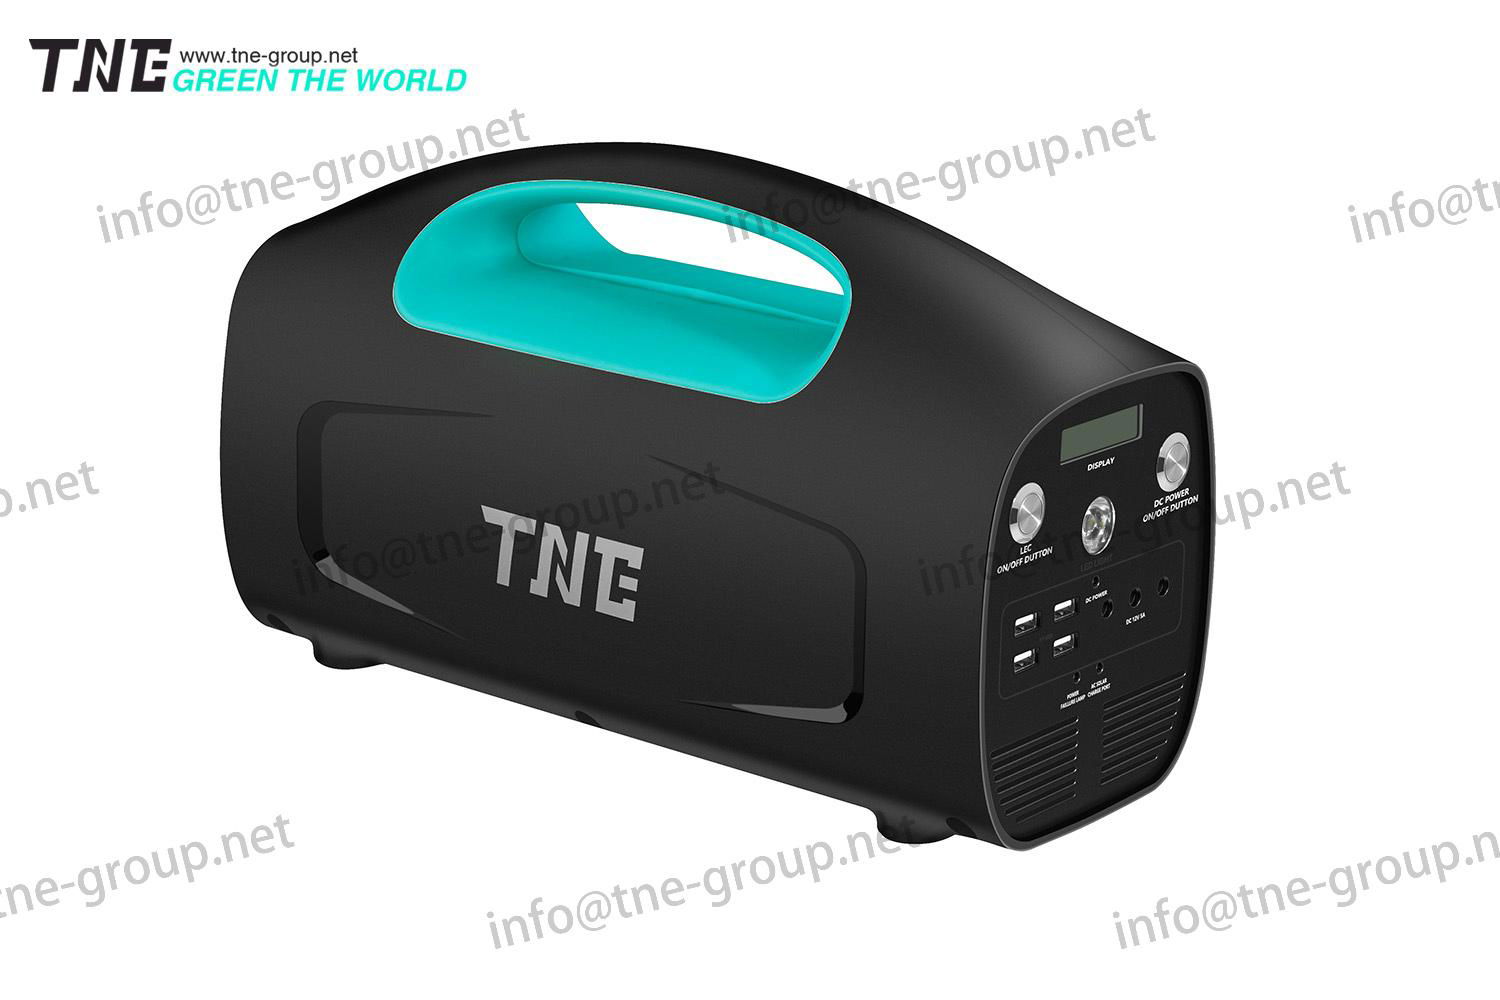 TNE solar online multi-function ups portable generator power bank 3